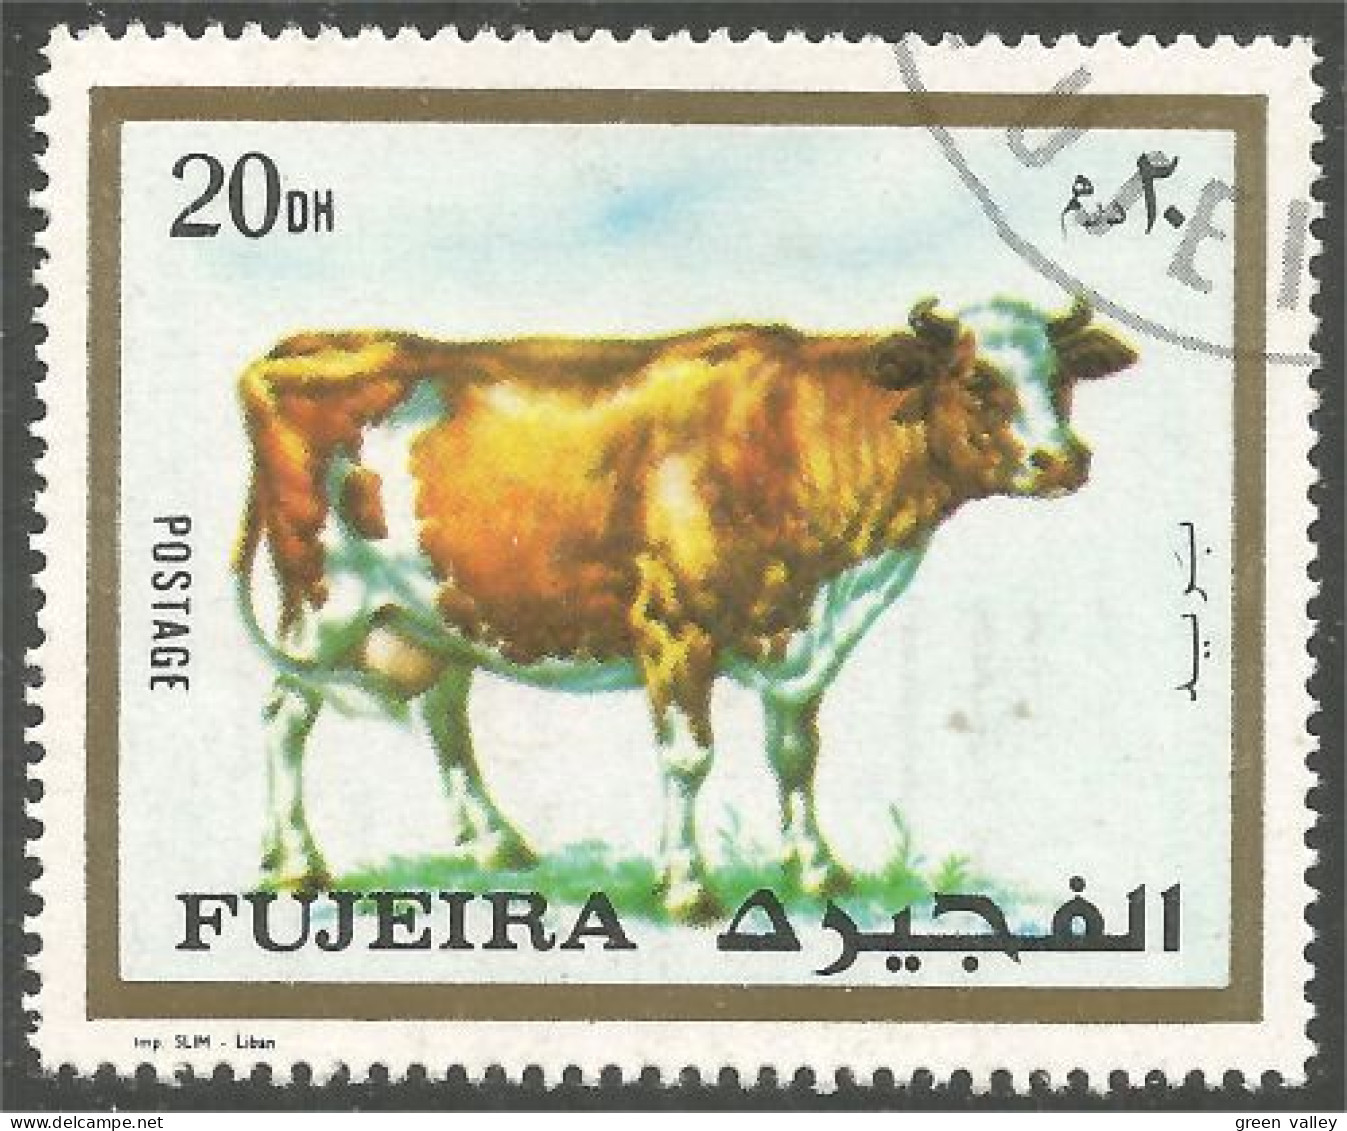 400 Fujeira Vache Cow Vaca Kuh Koe Mucca Vacca (FUJ-15) - Vacas